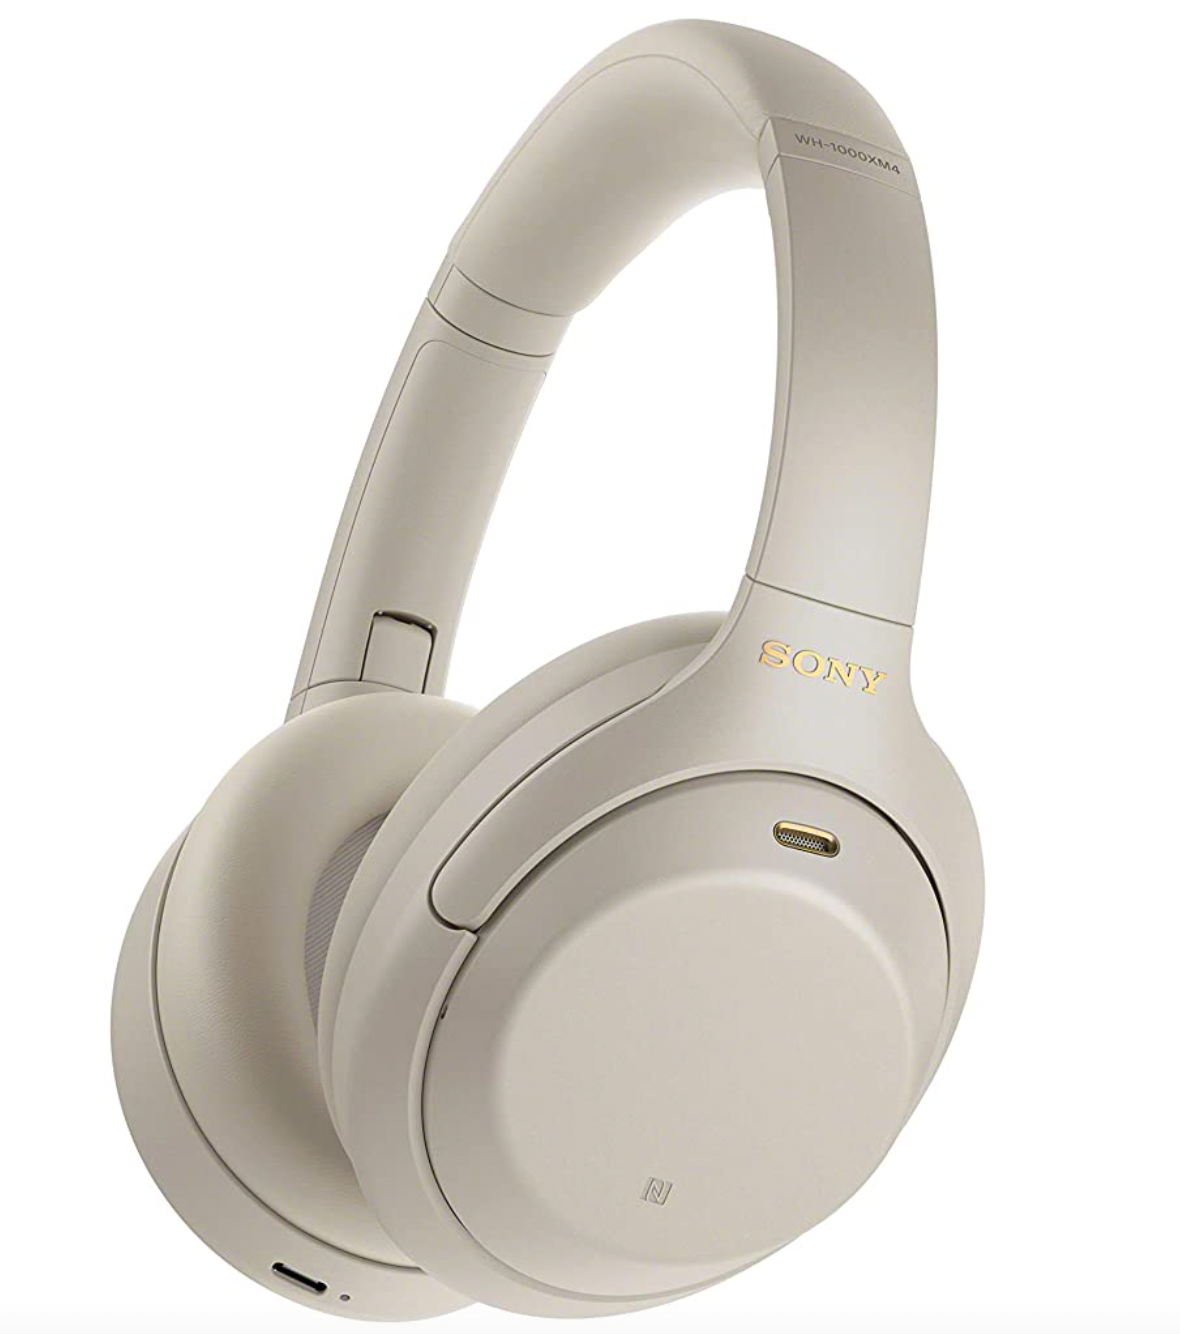 Sony Wireless Industry Leading Noise Canceling Headphones